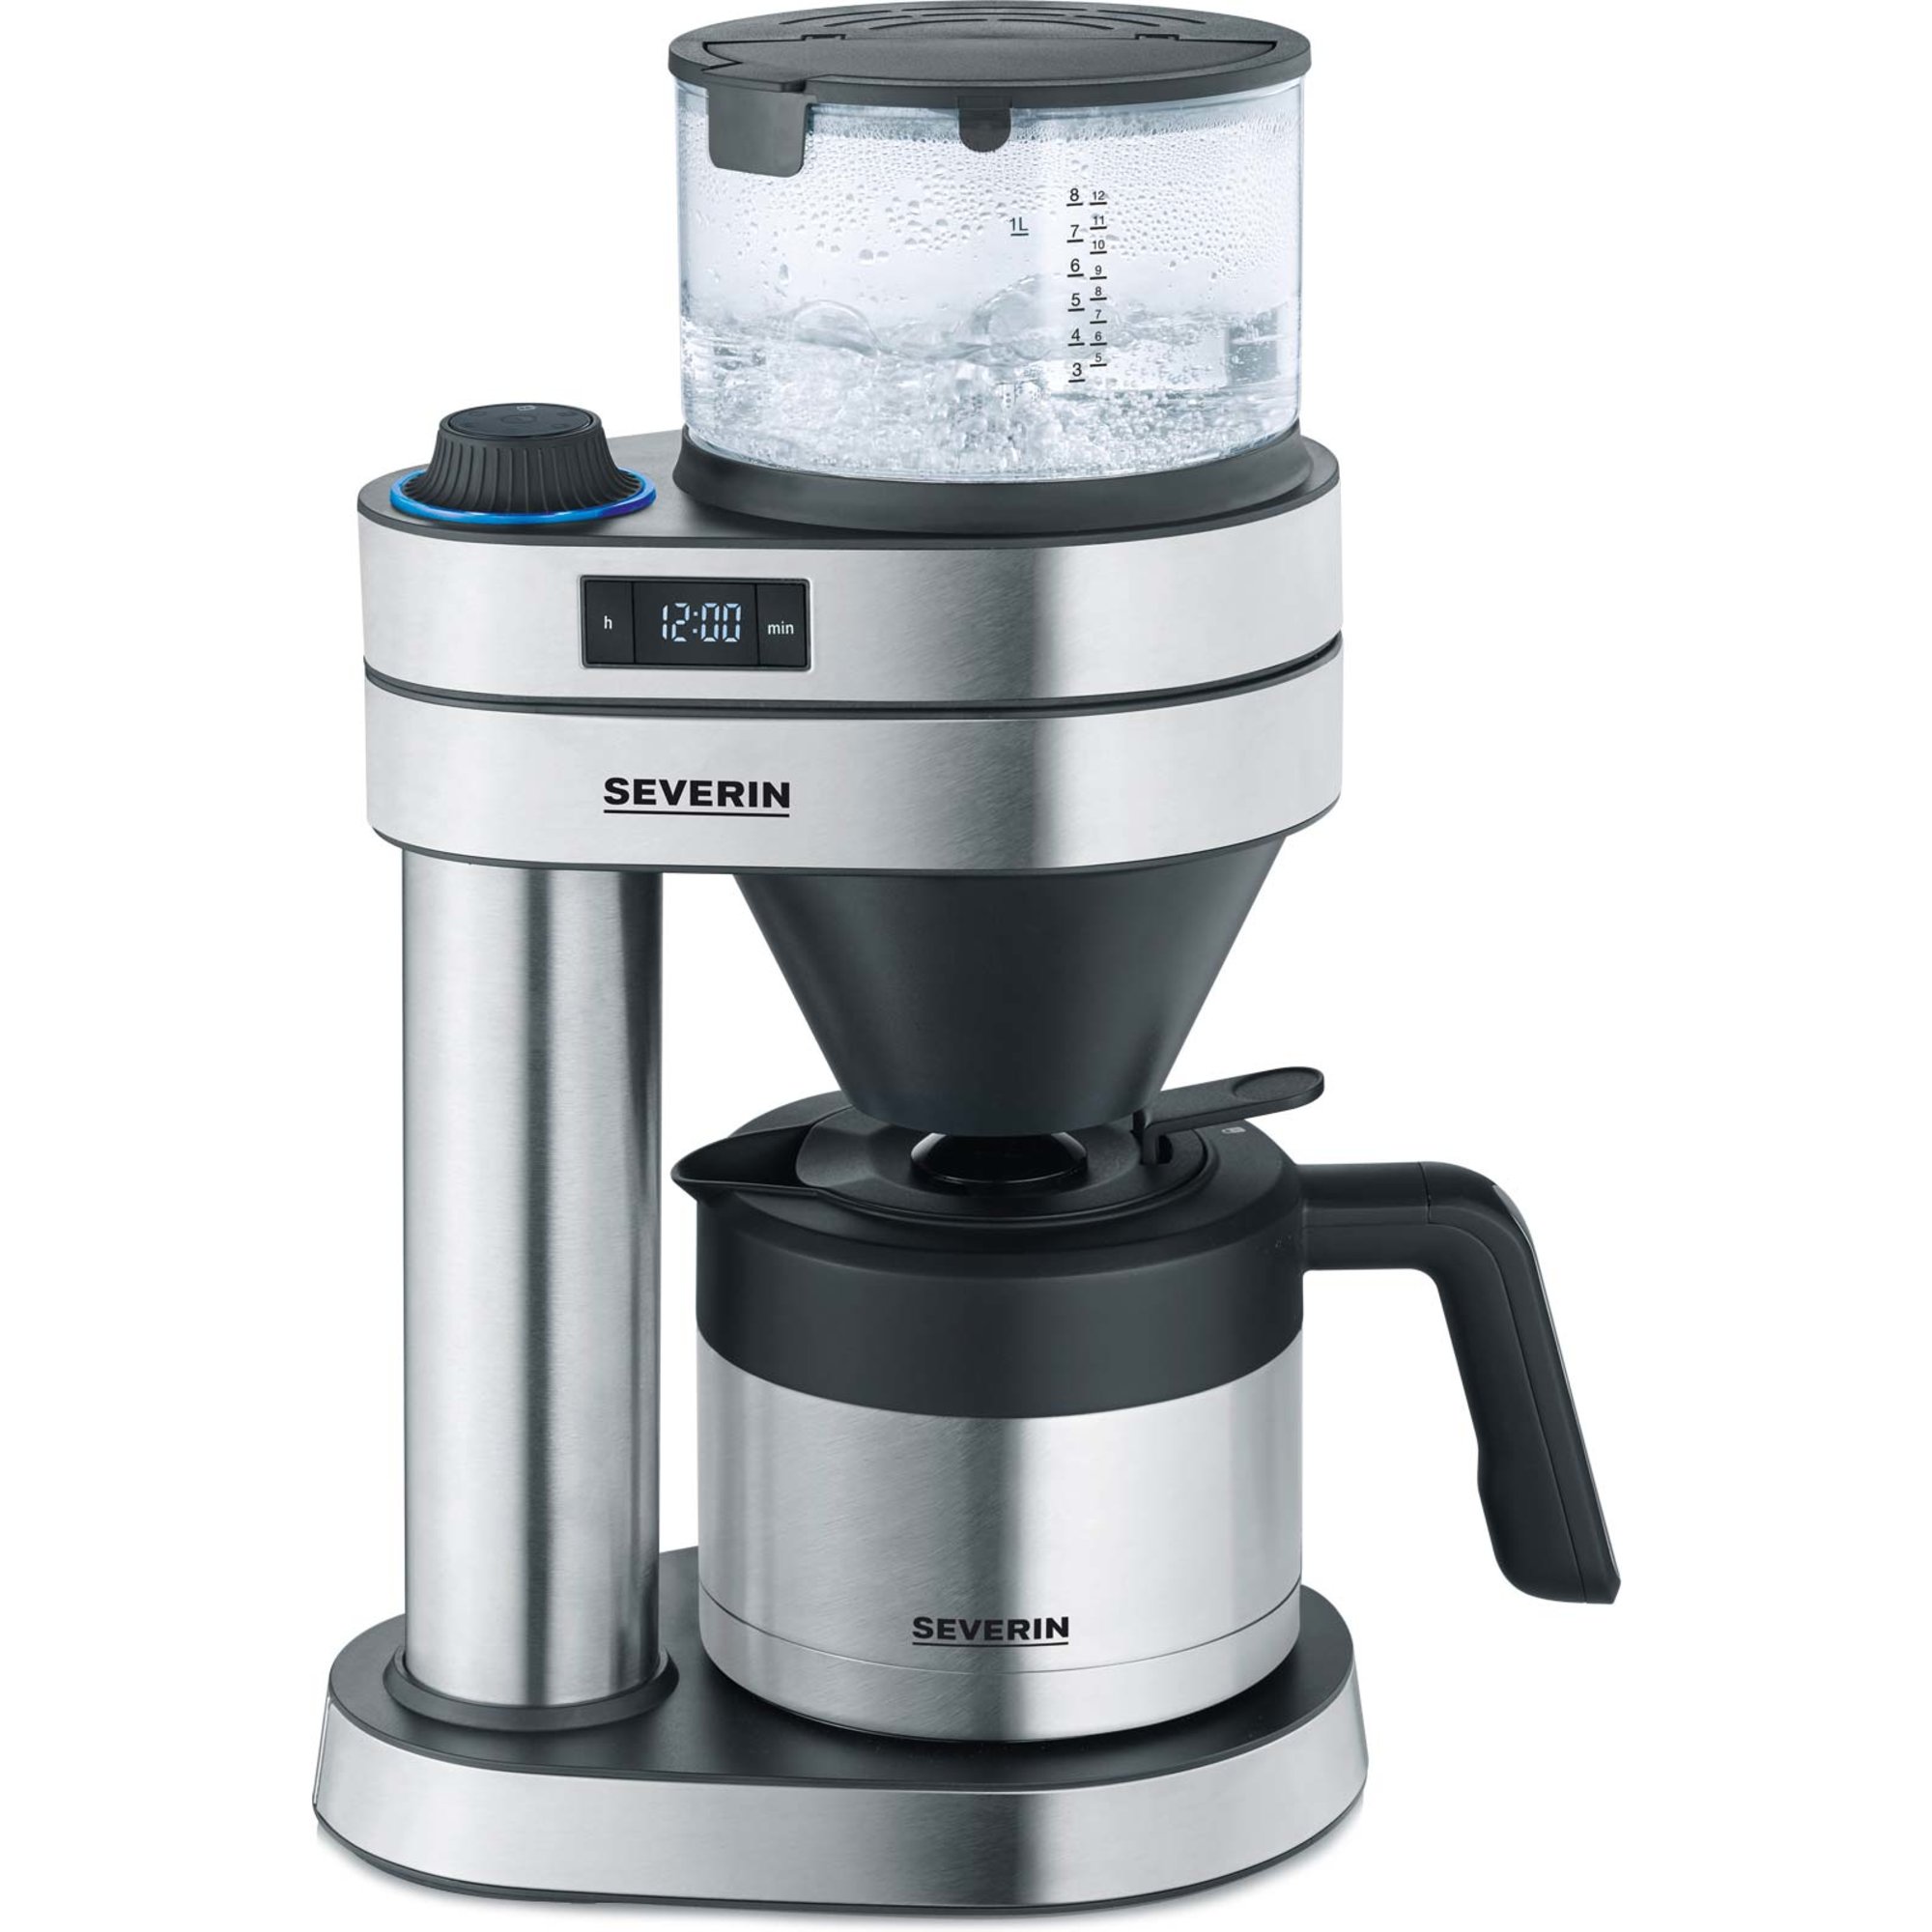 Café Caprice 2.0 kaffemaskine med termokande fra